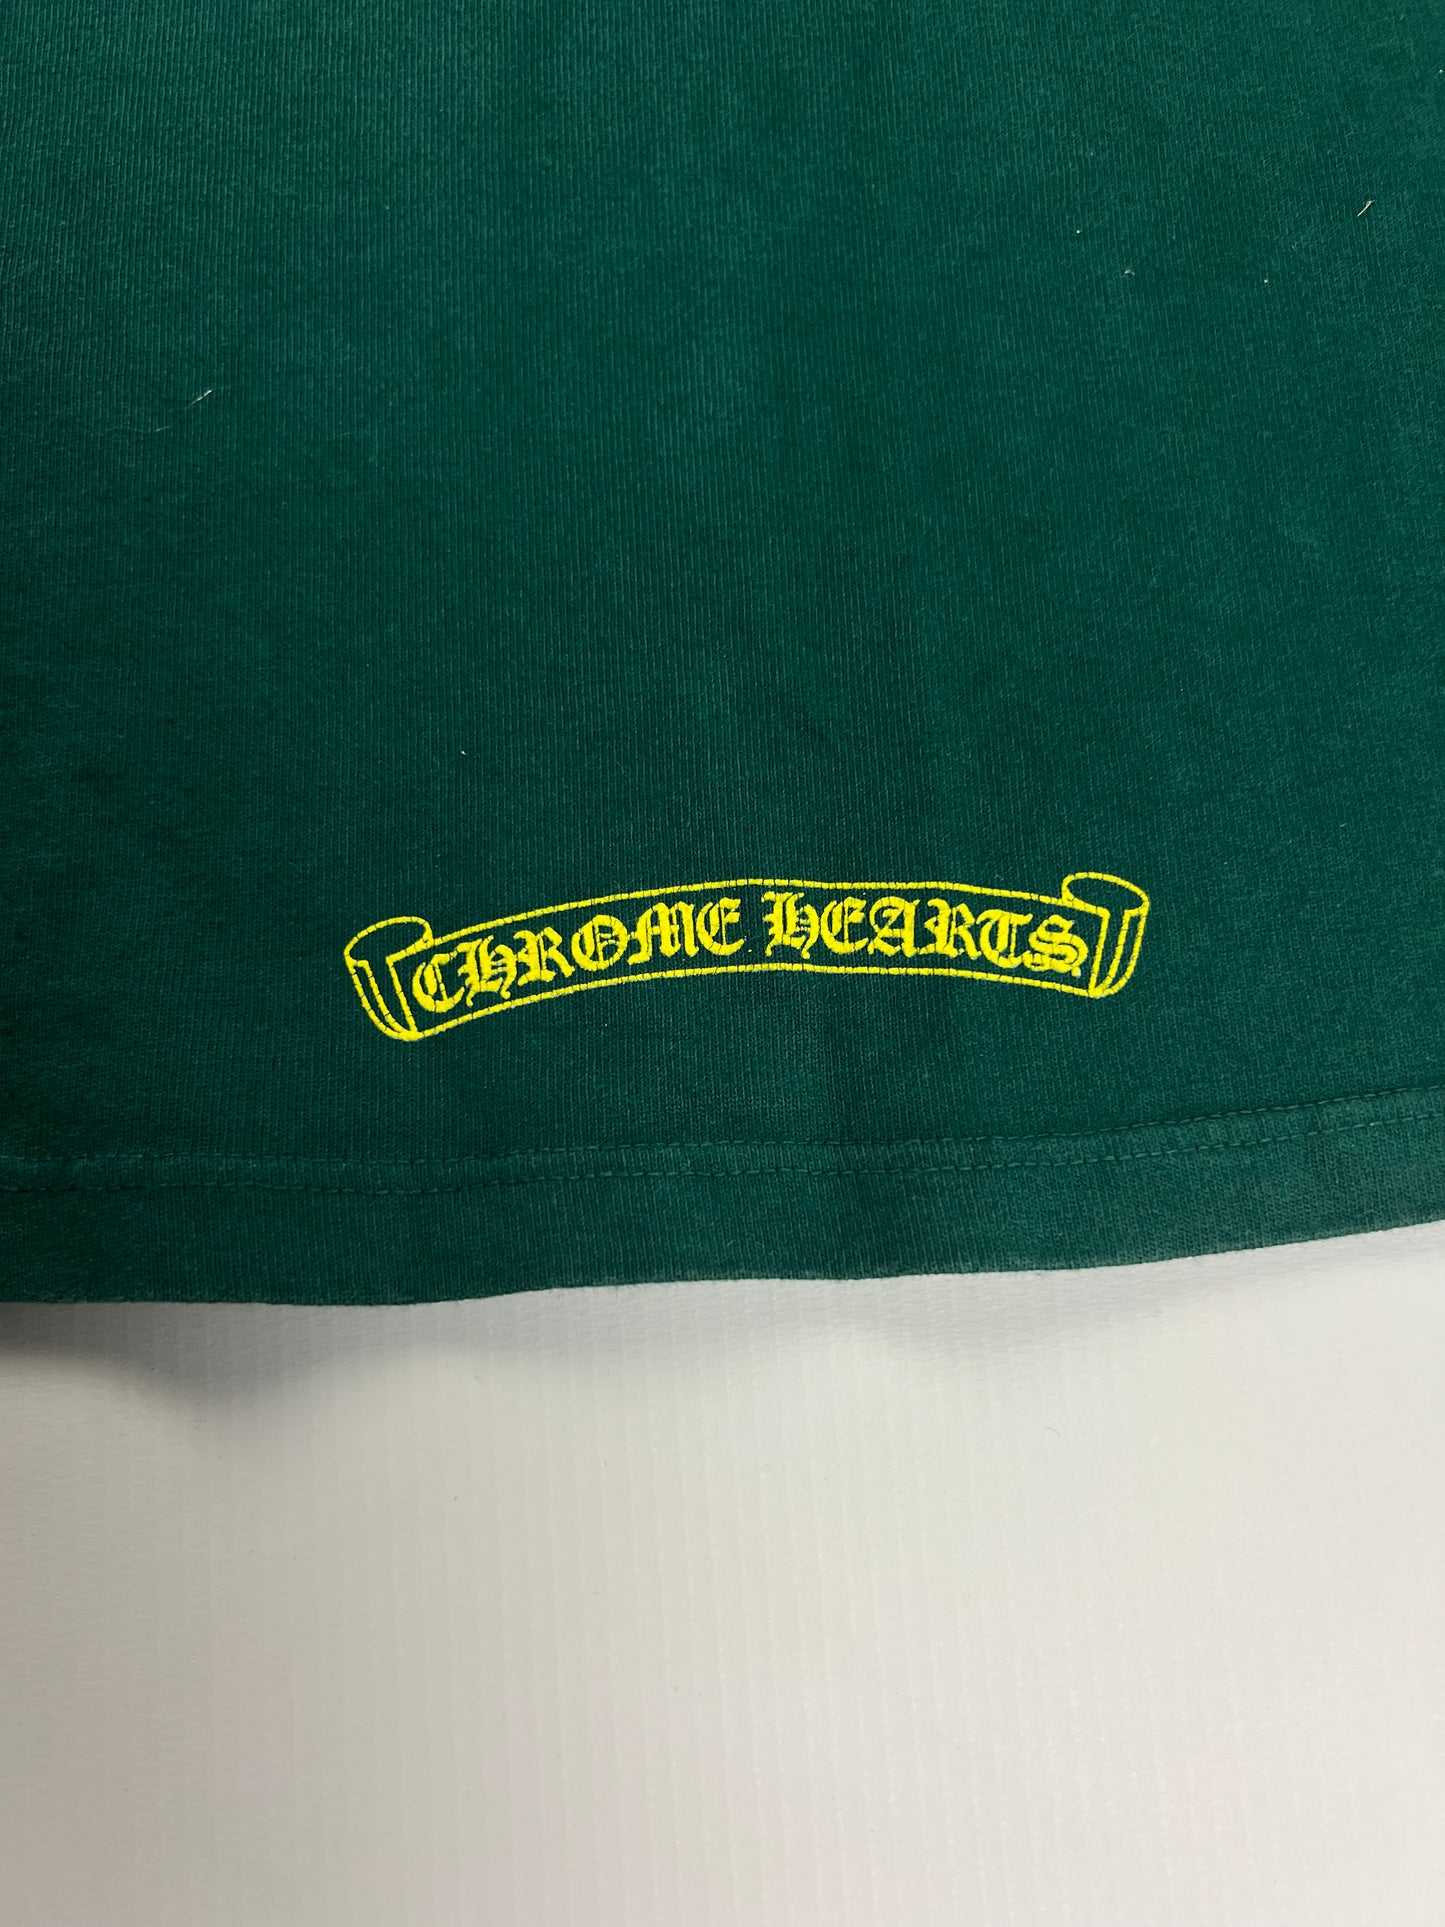 Chrome Hearts Mattyboy Antidote Green T-Shirt SZ:M